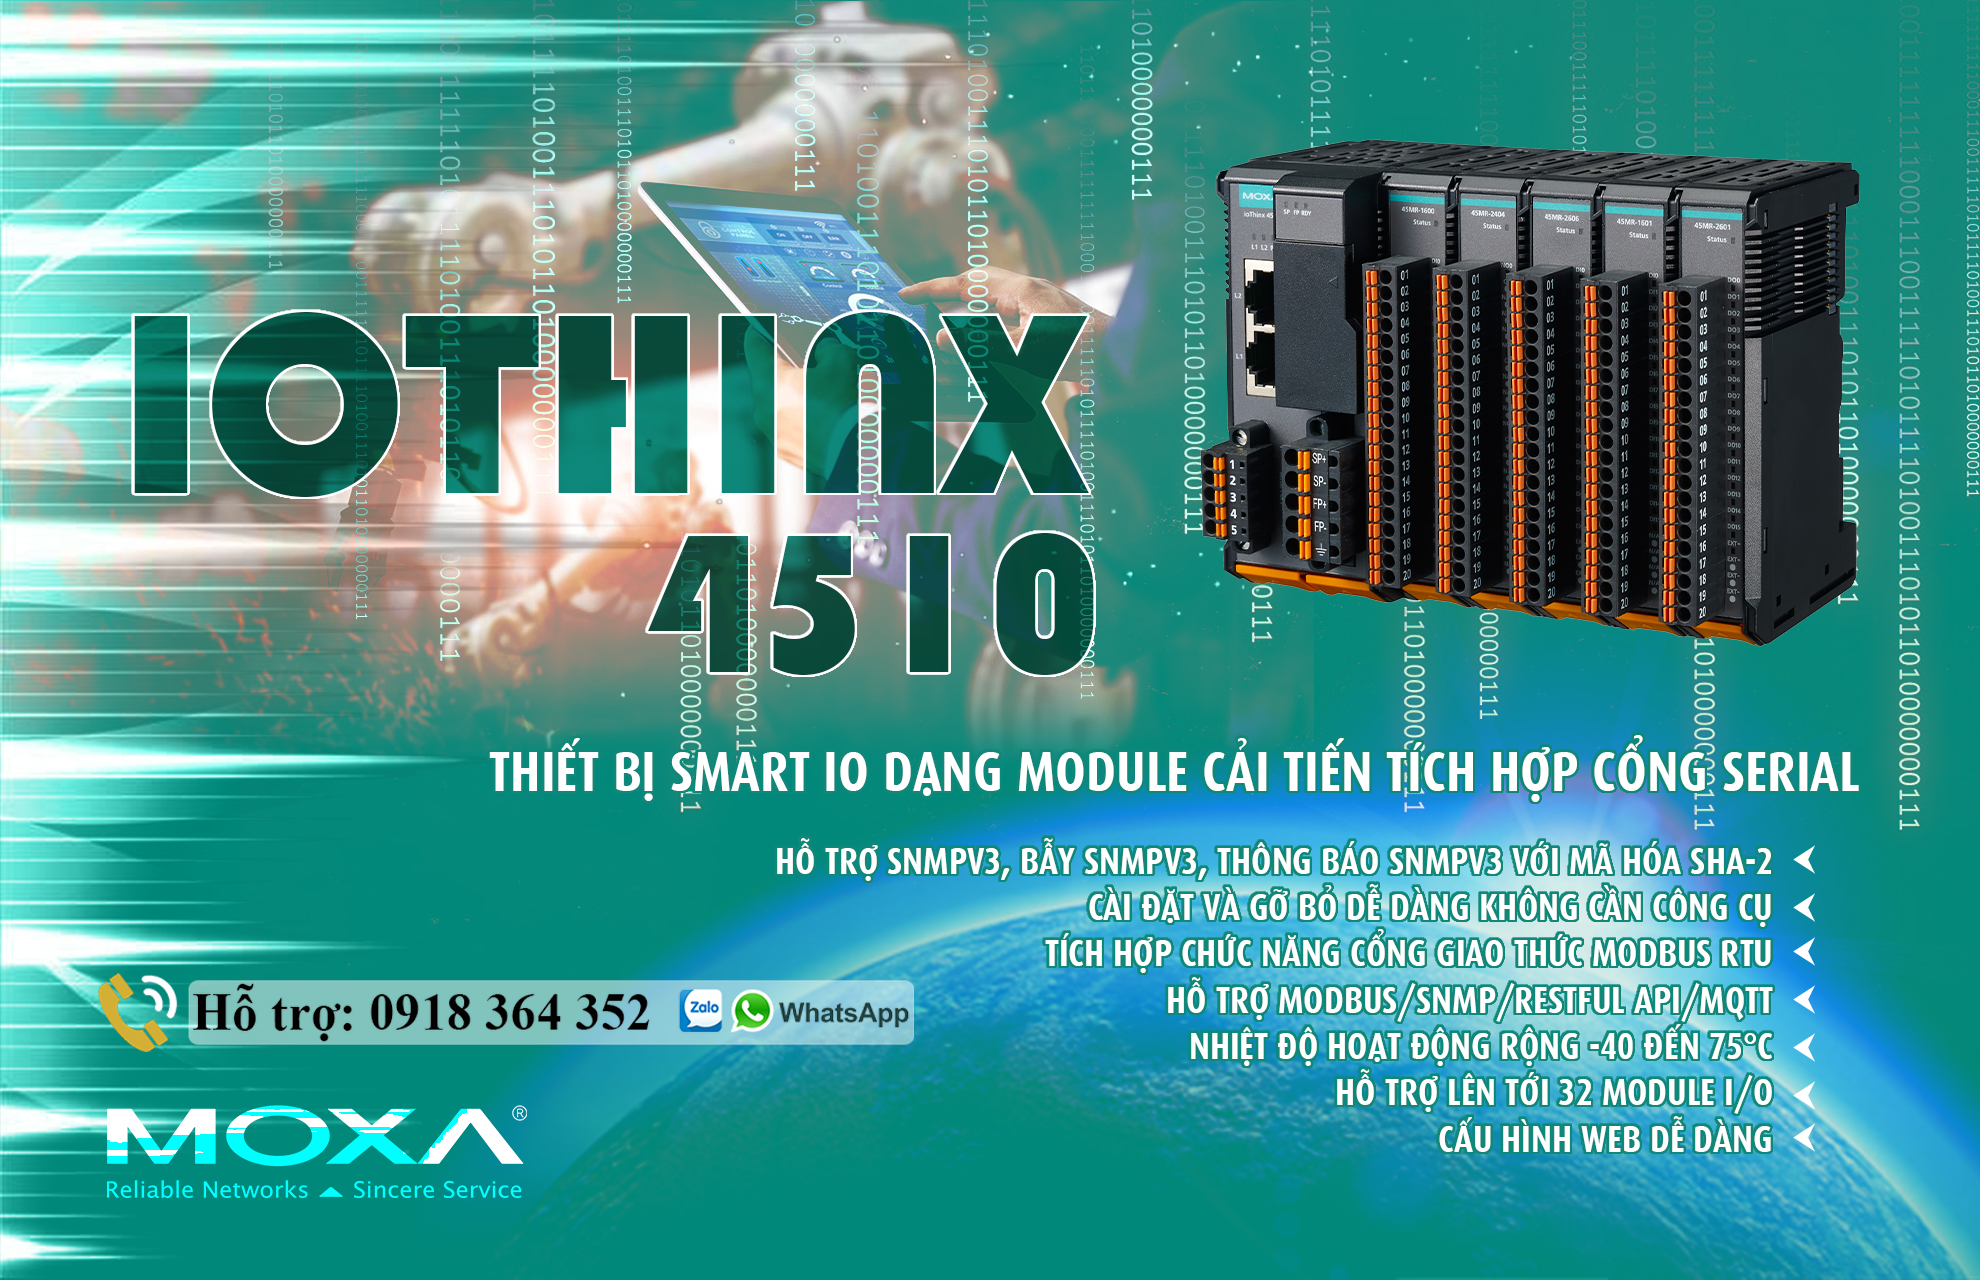 iothinx-4510-t-thiet-bi-smart-io-dang-module-cai-tien-tich-hop-cong-serial-moxa-viet-nam.png